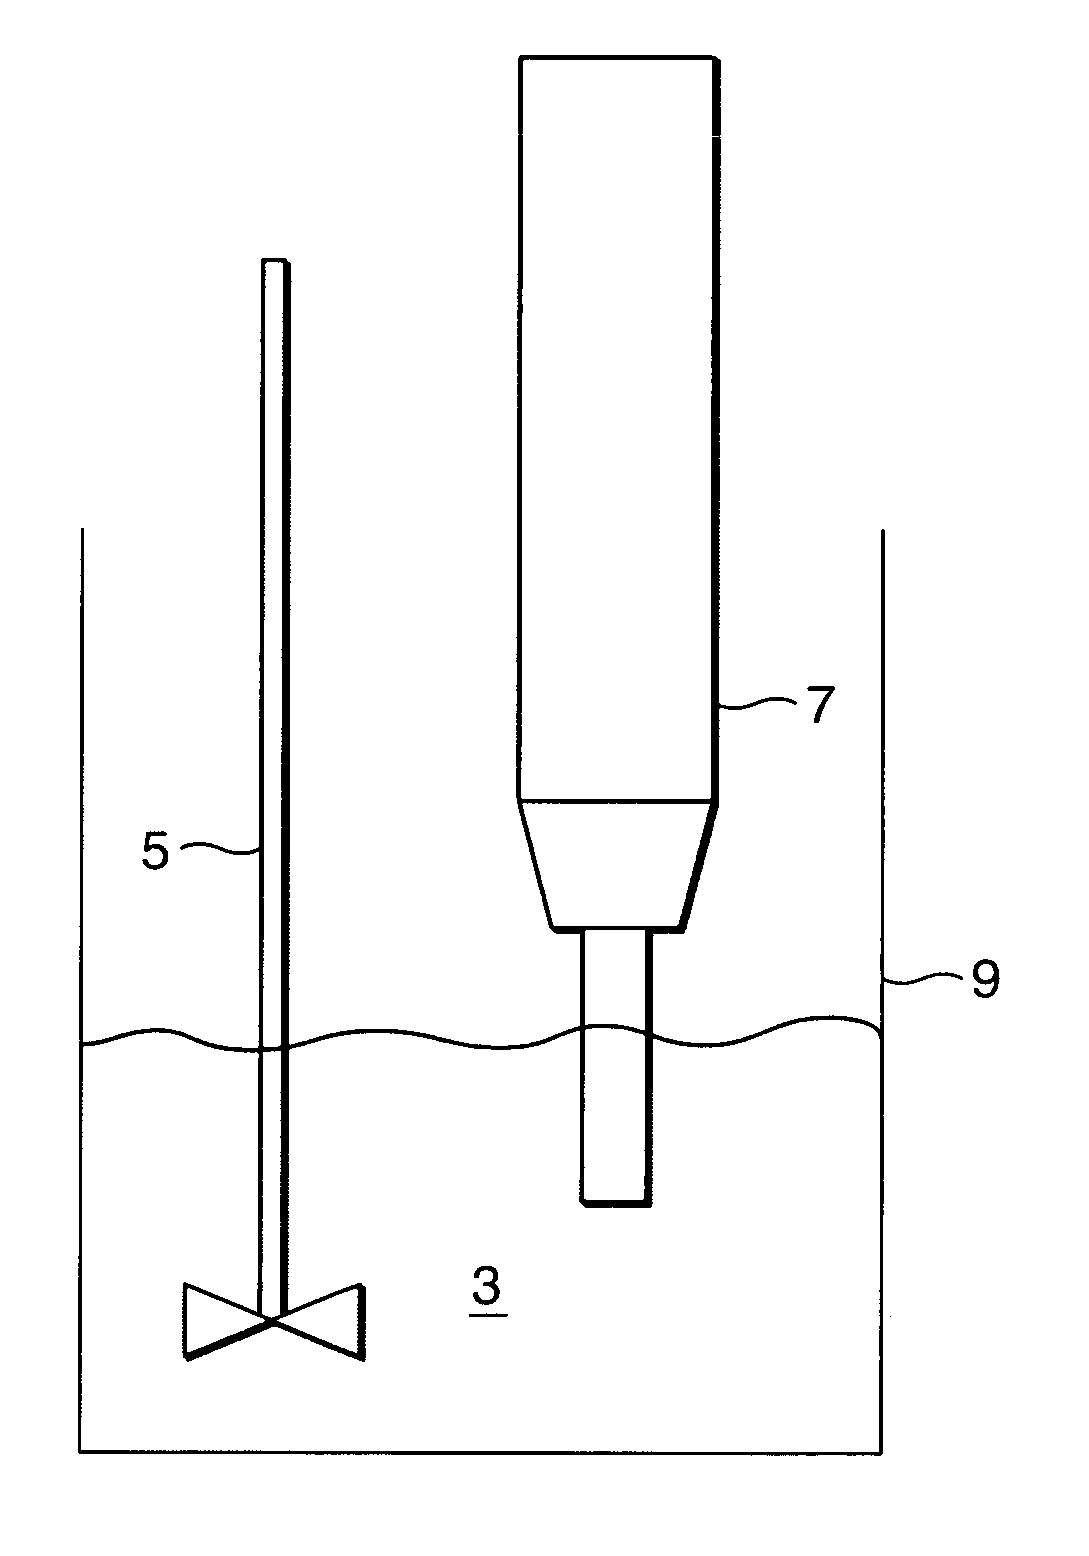 Method of making electroluminescent phosphor using sonochemistry